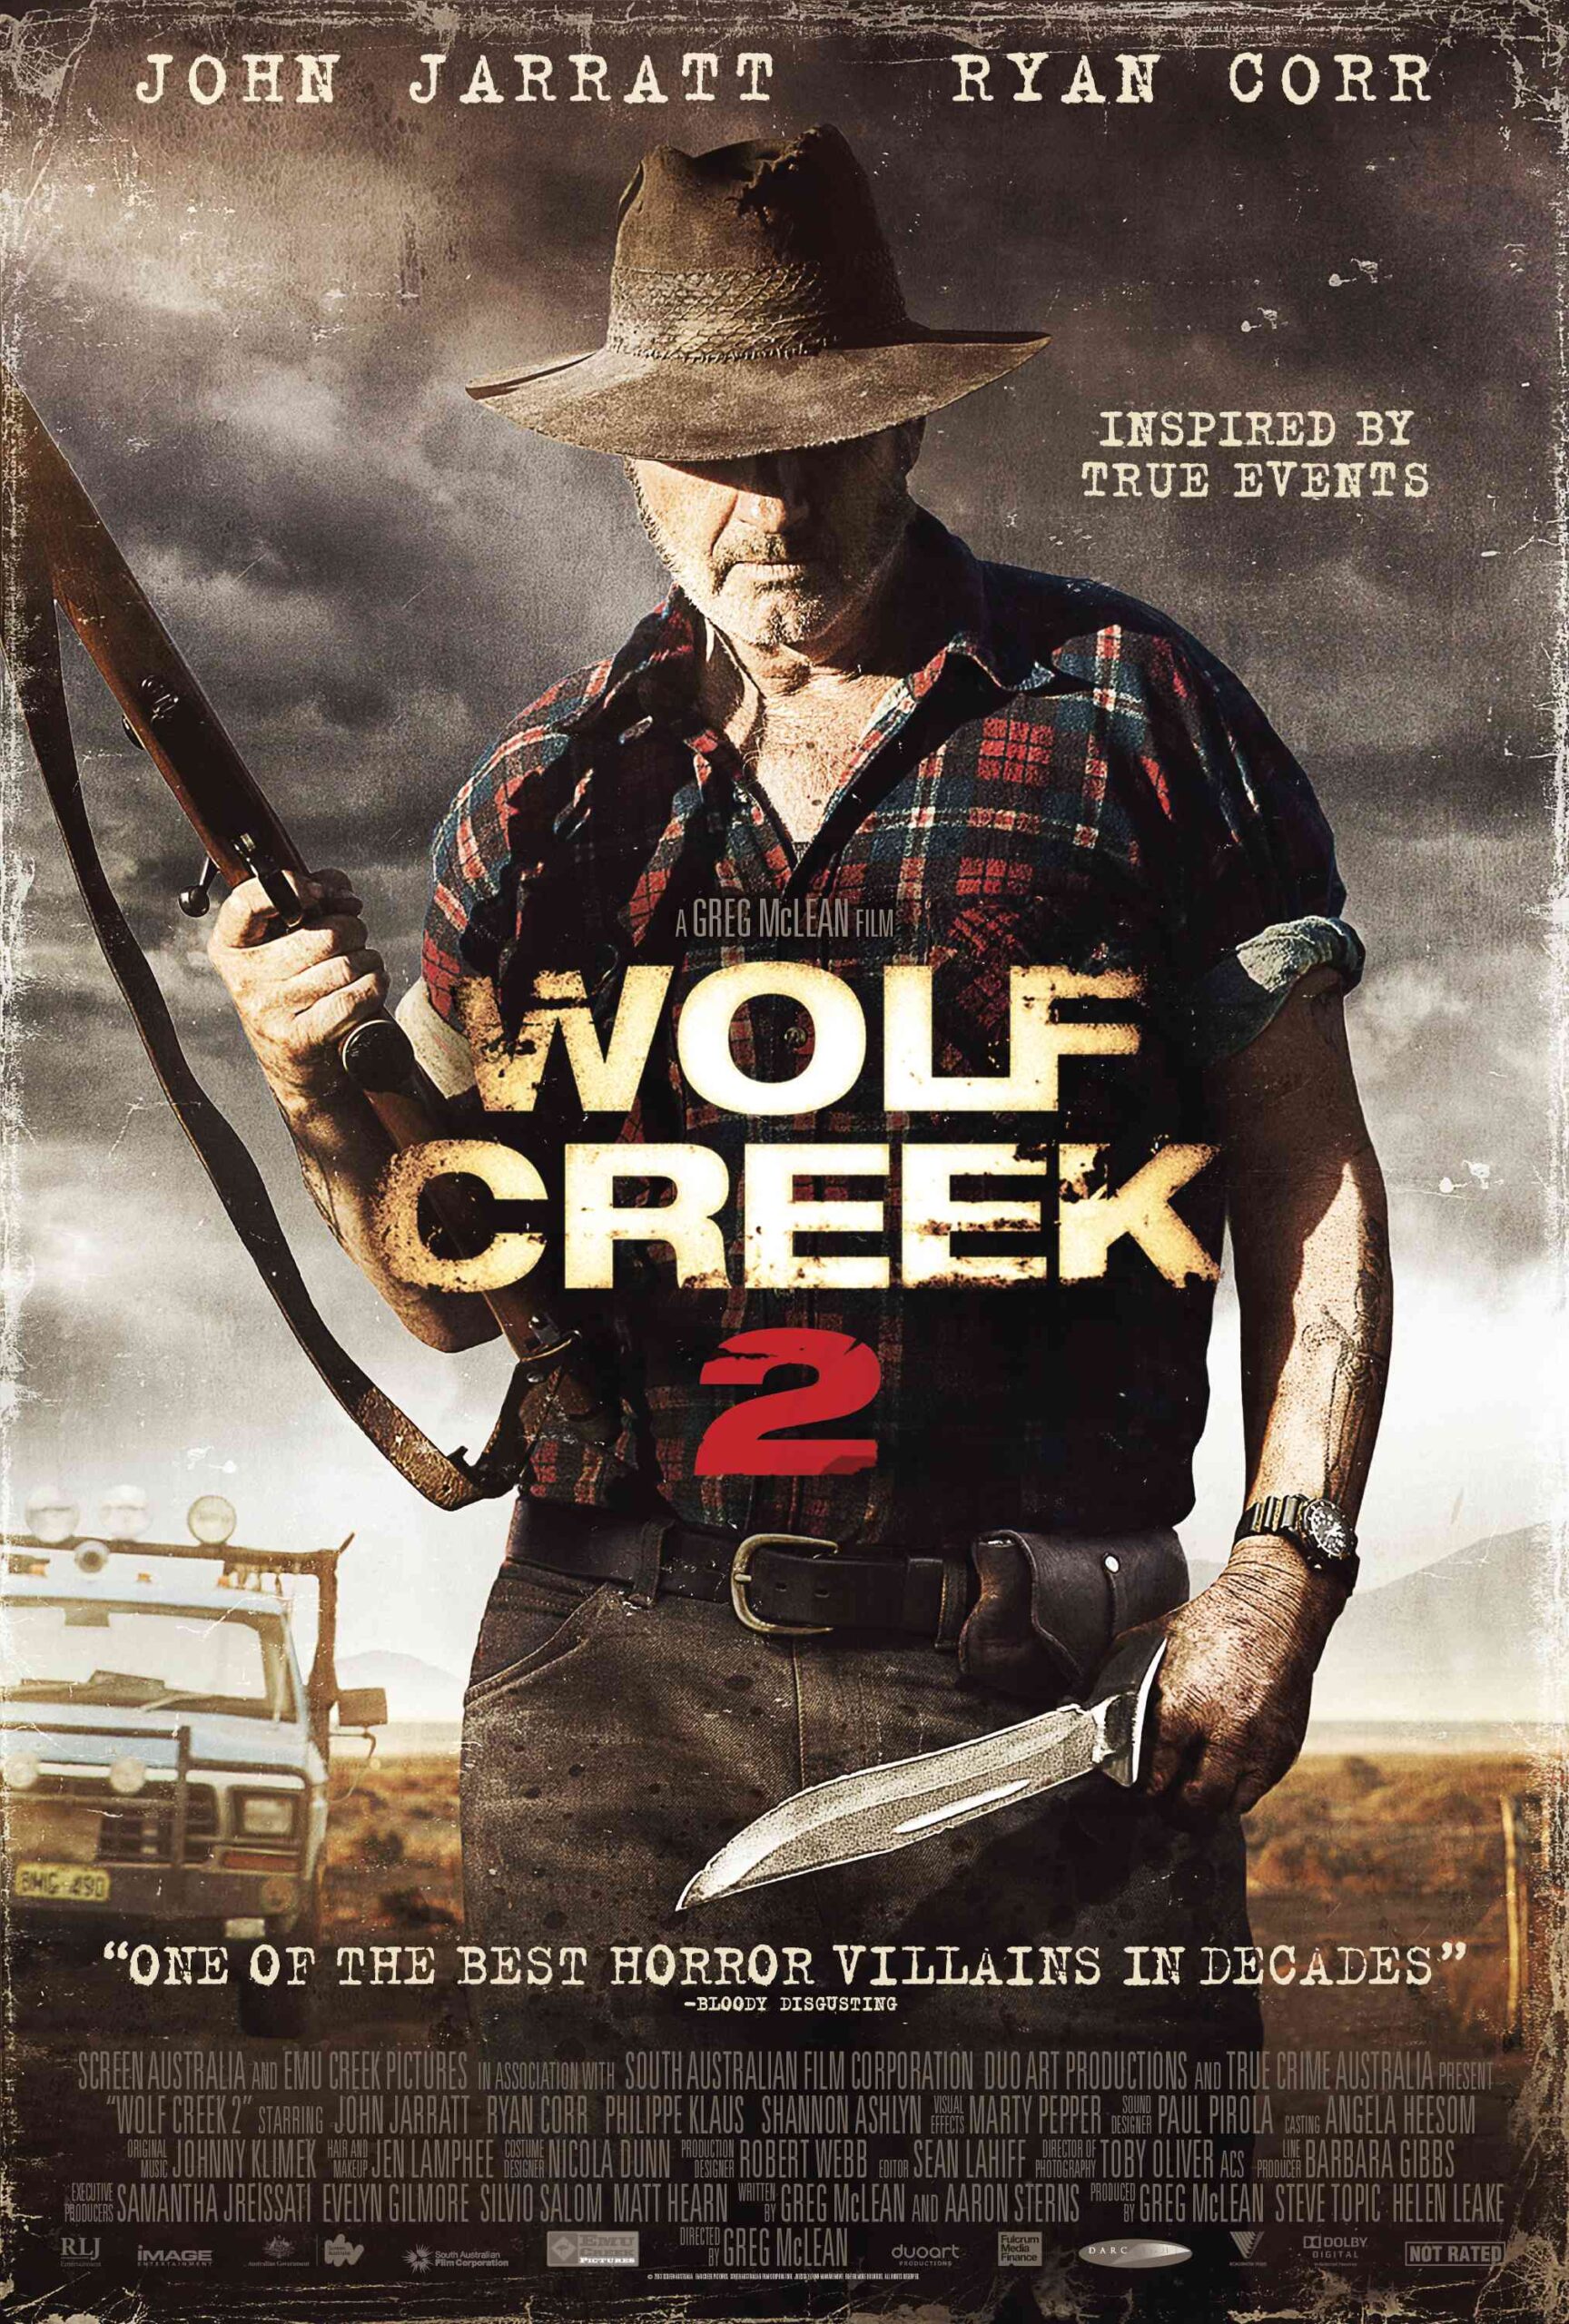 FULL MOVIE: Wolf Creek 2 (2013) [Horror]